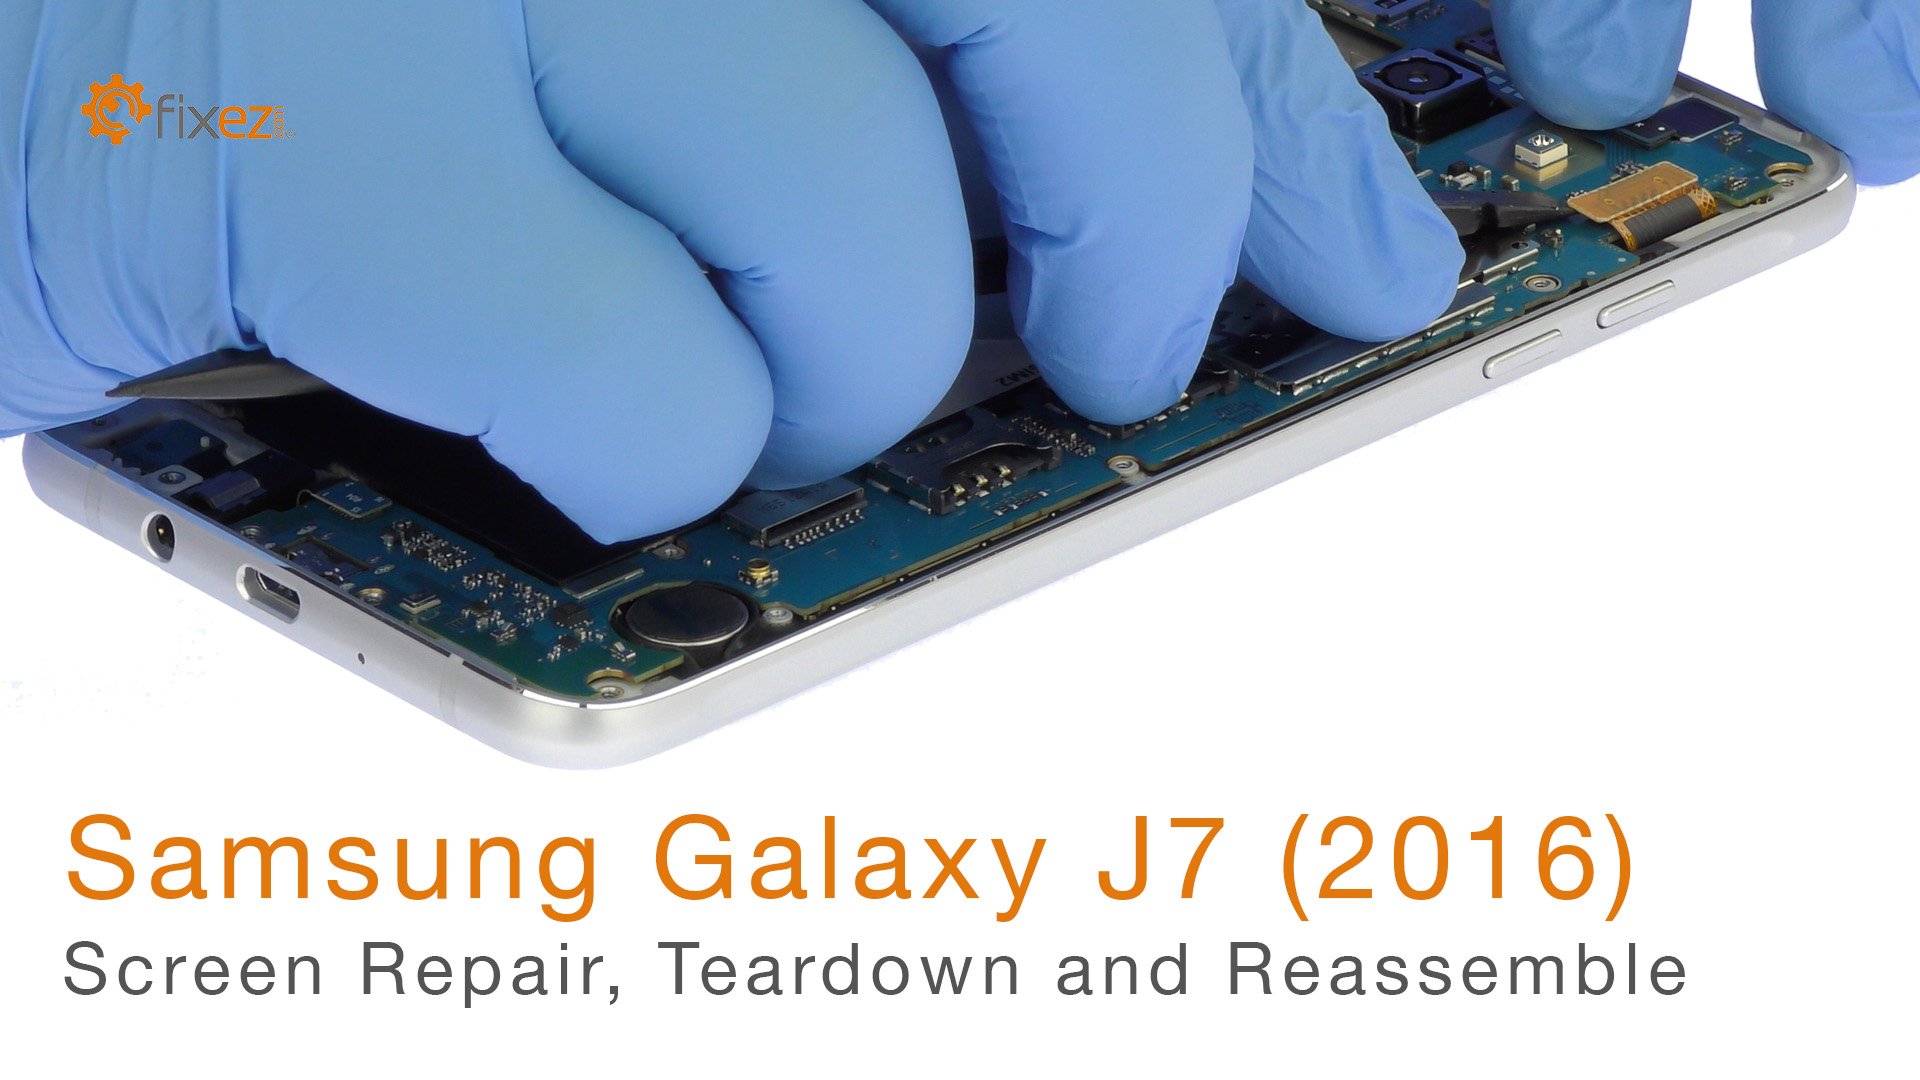 Samsung Galaxy J7 (2016) Screen Repair, Teardown and Reassemble